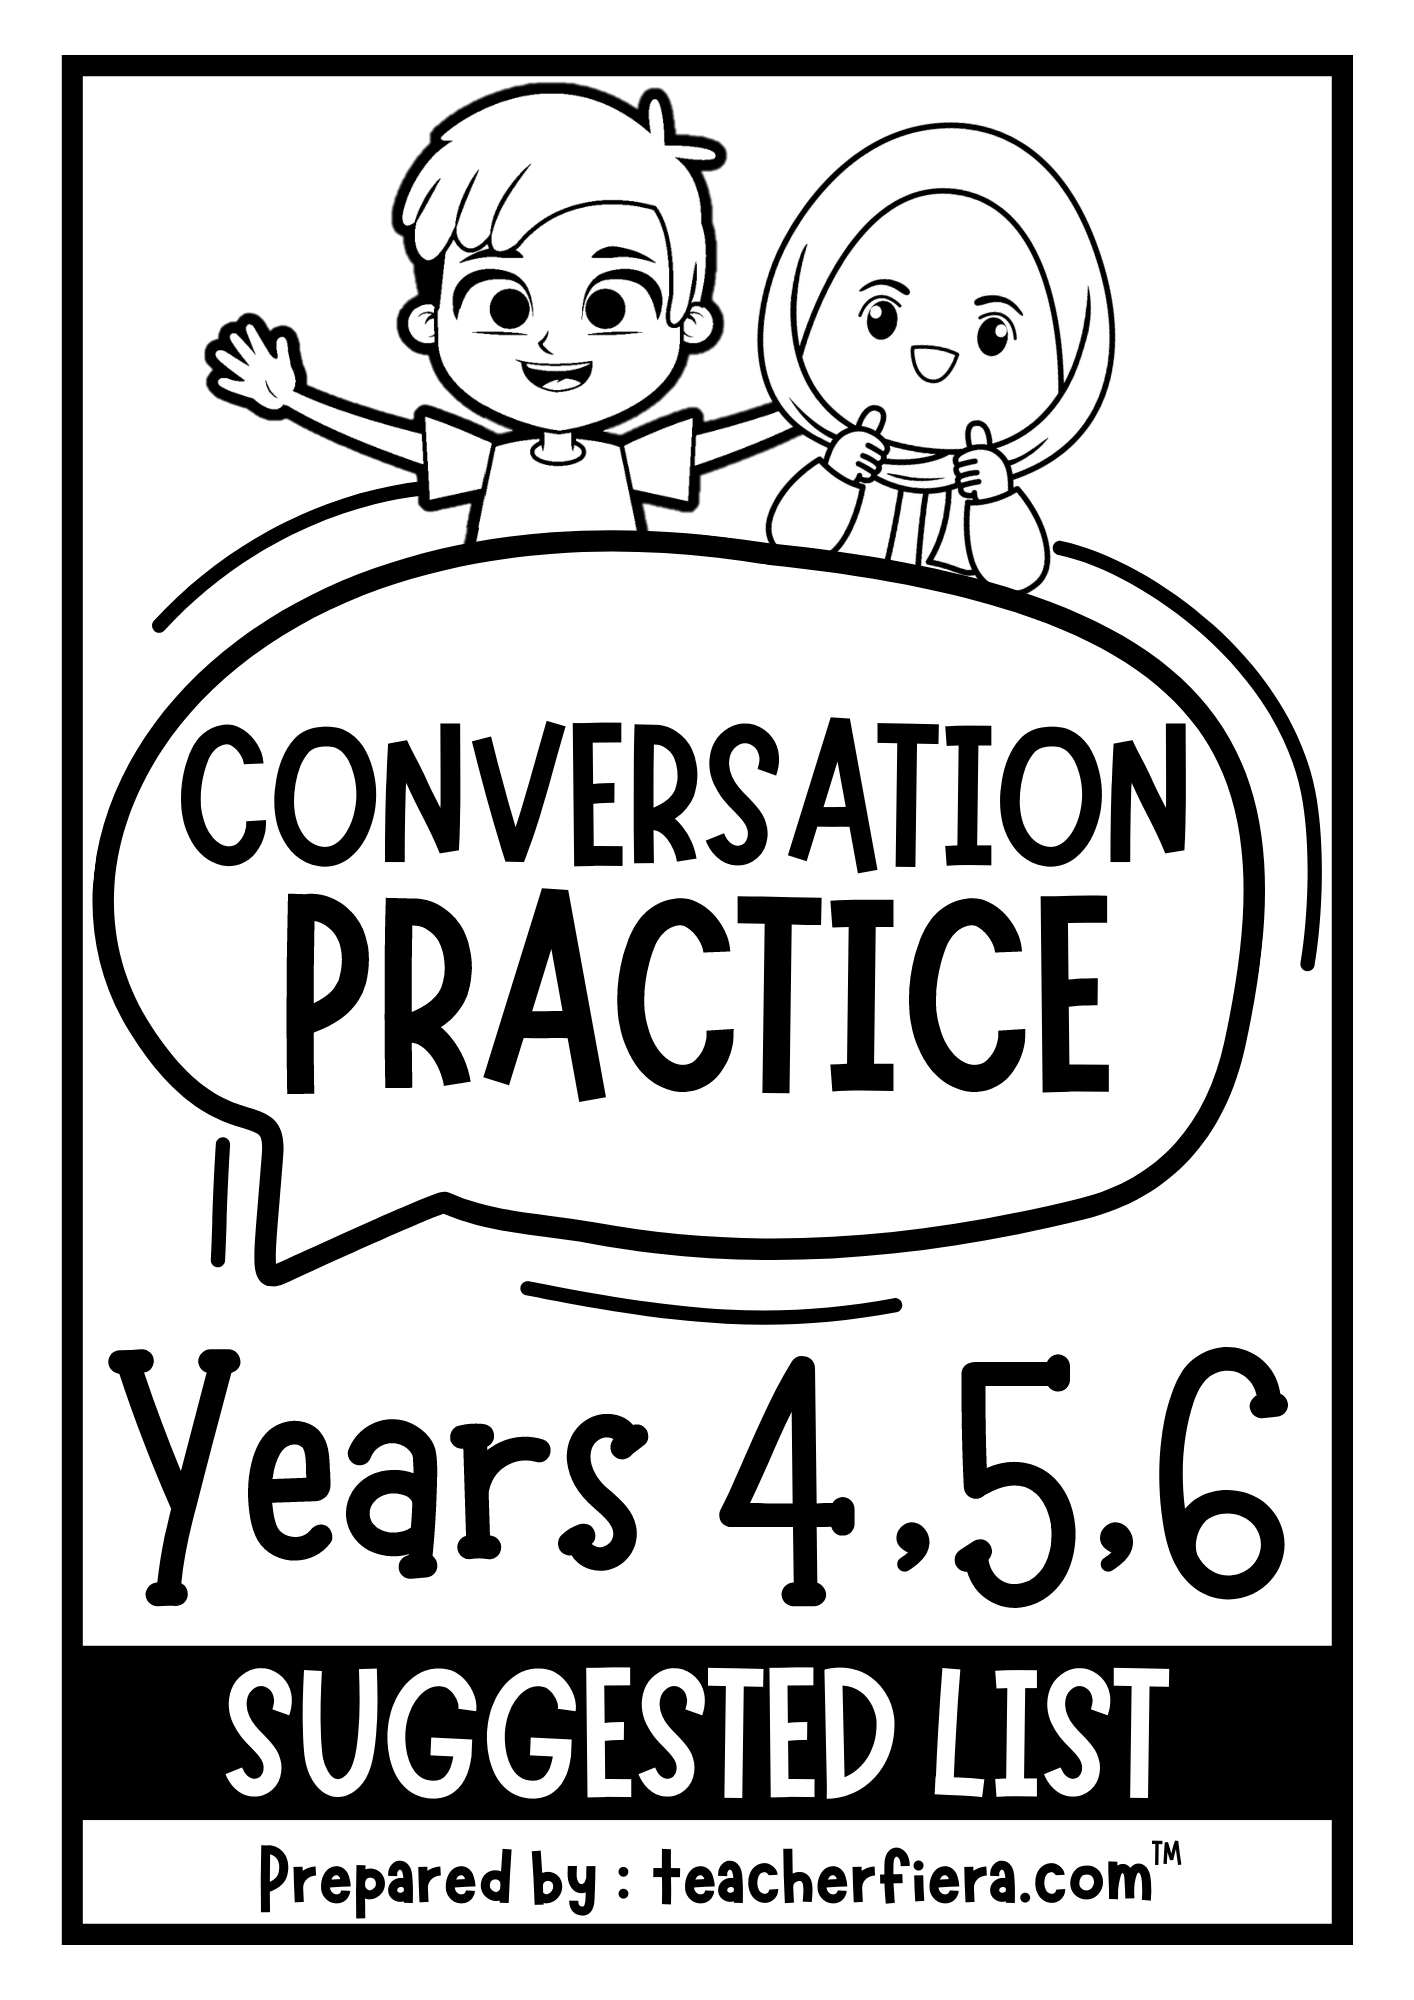 Conversation practice